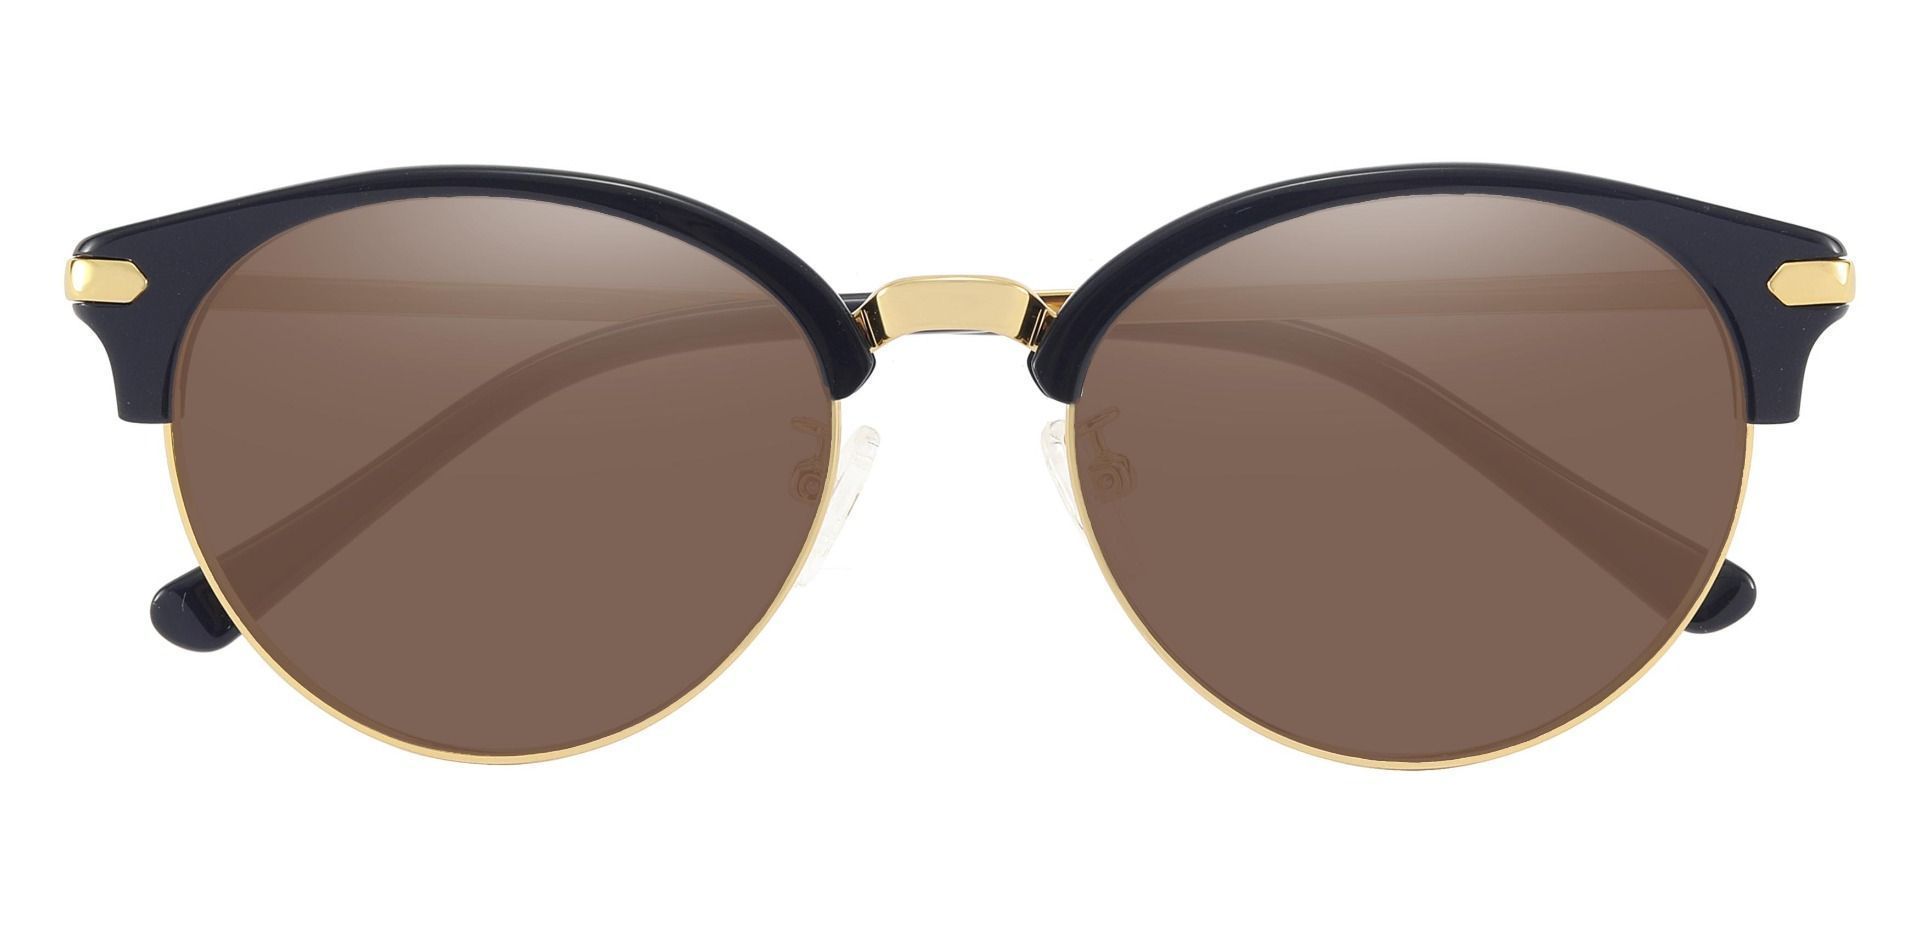 Catskill Browline Prescription Sunglasses - Blue Frame With Brown Lenses